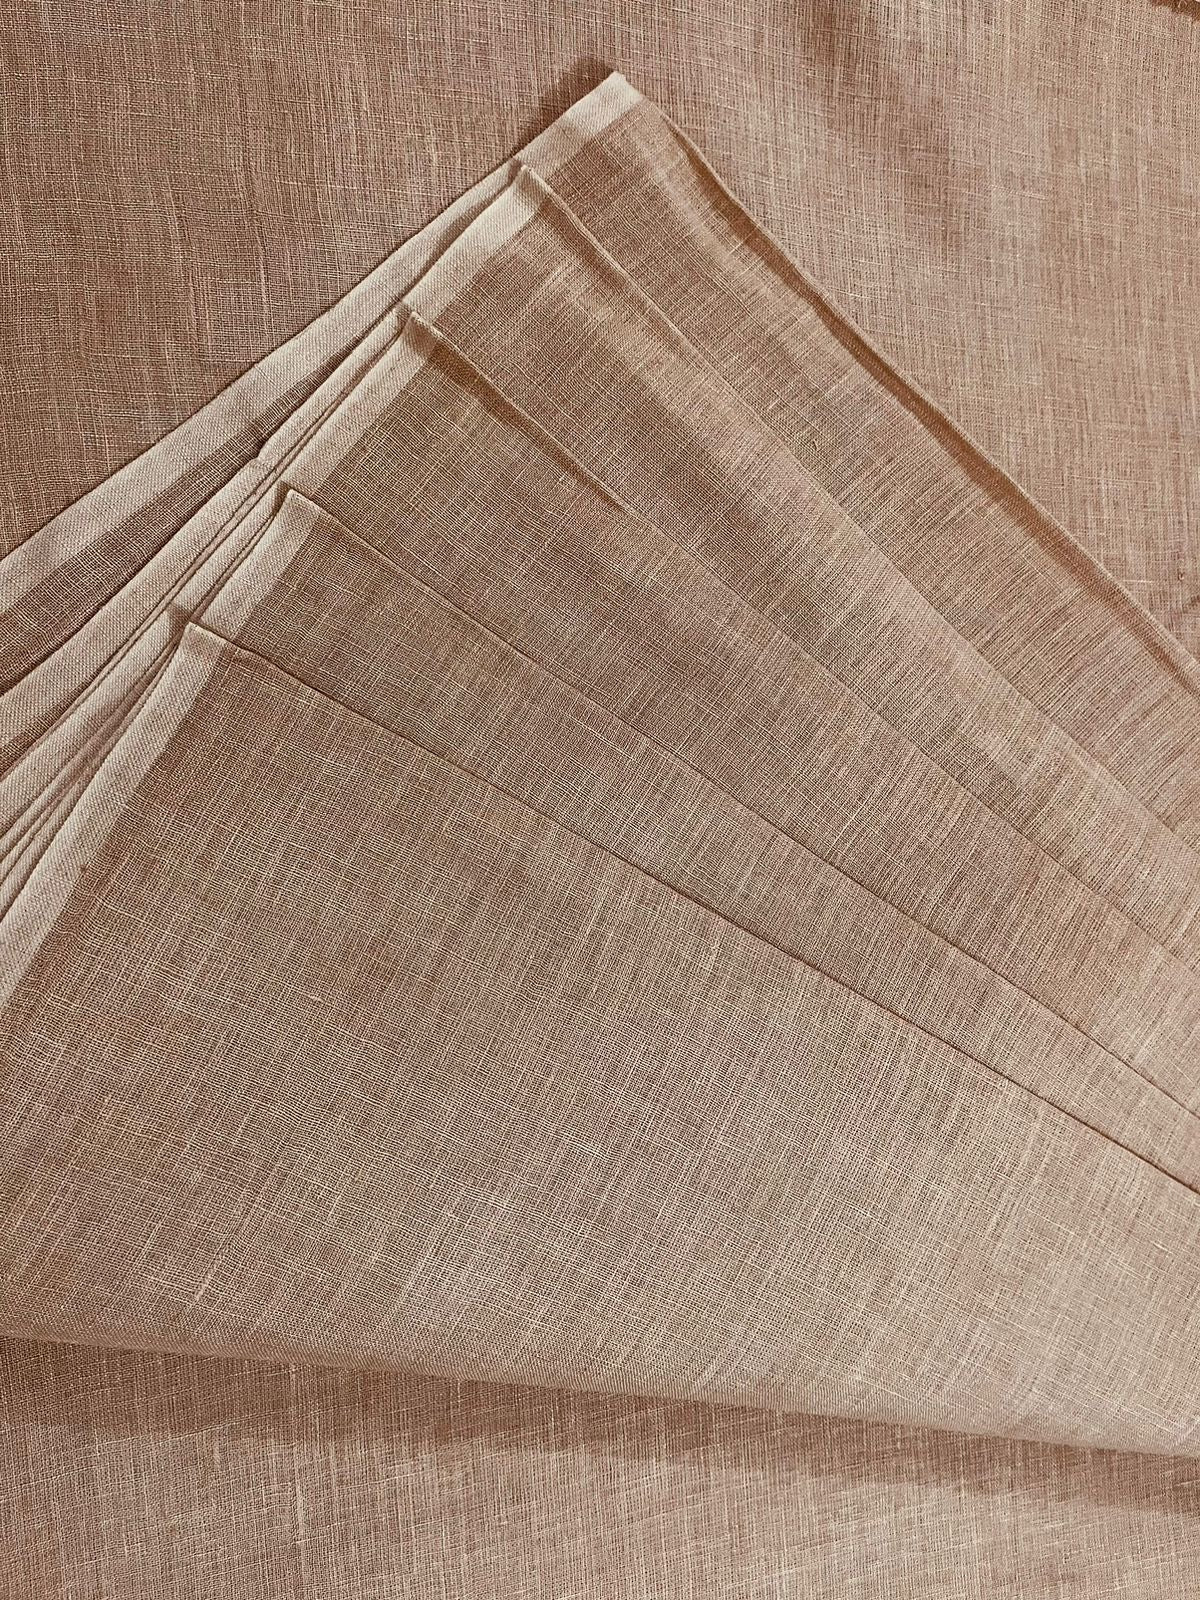 40 lea 58 inch 100% pure Handloom Linen Fabric -Beige